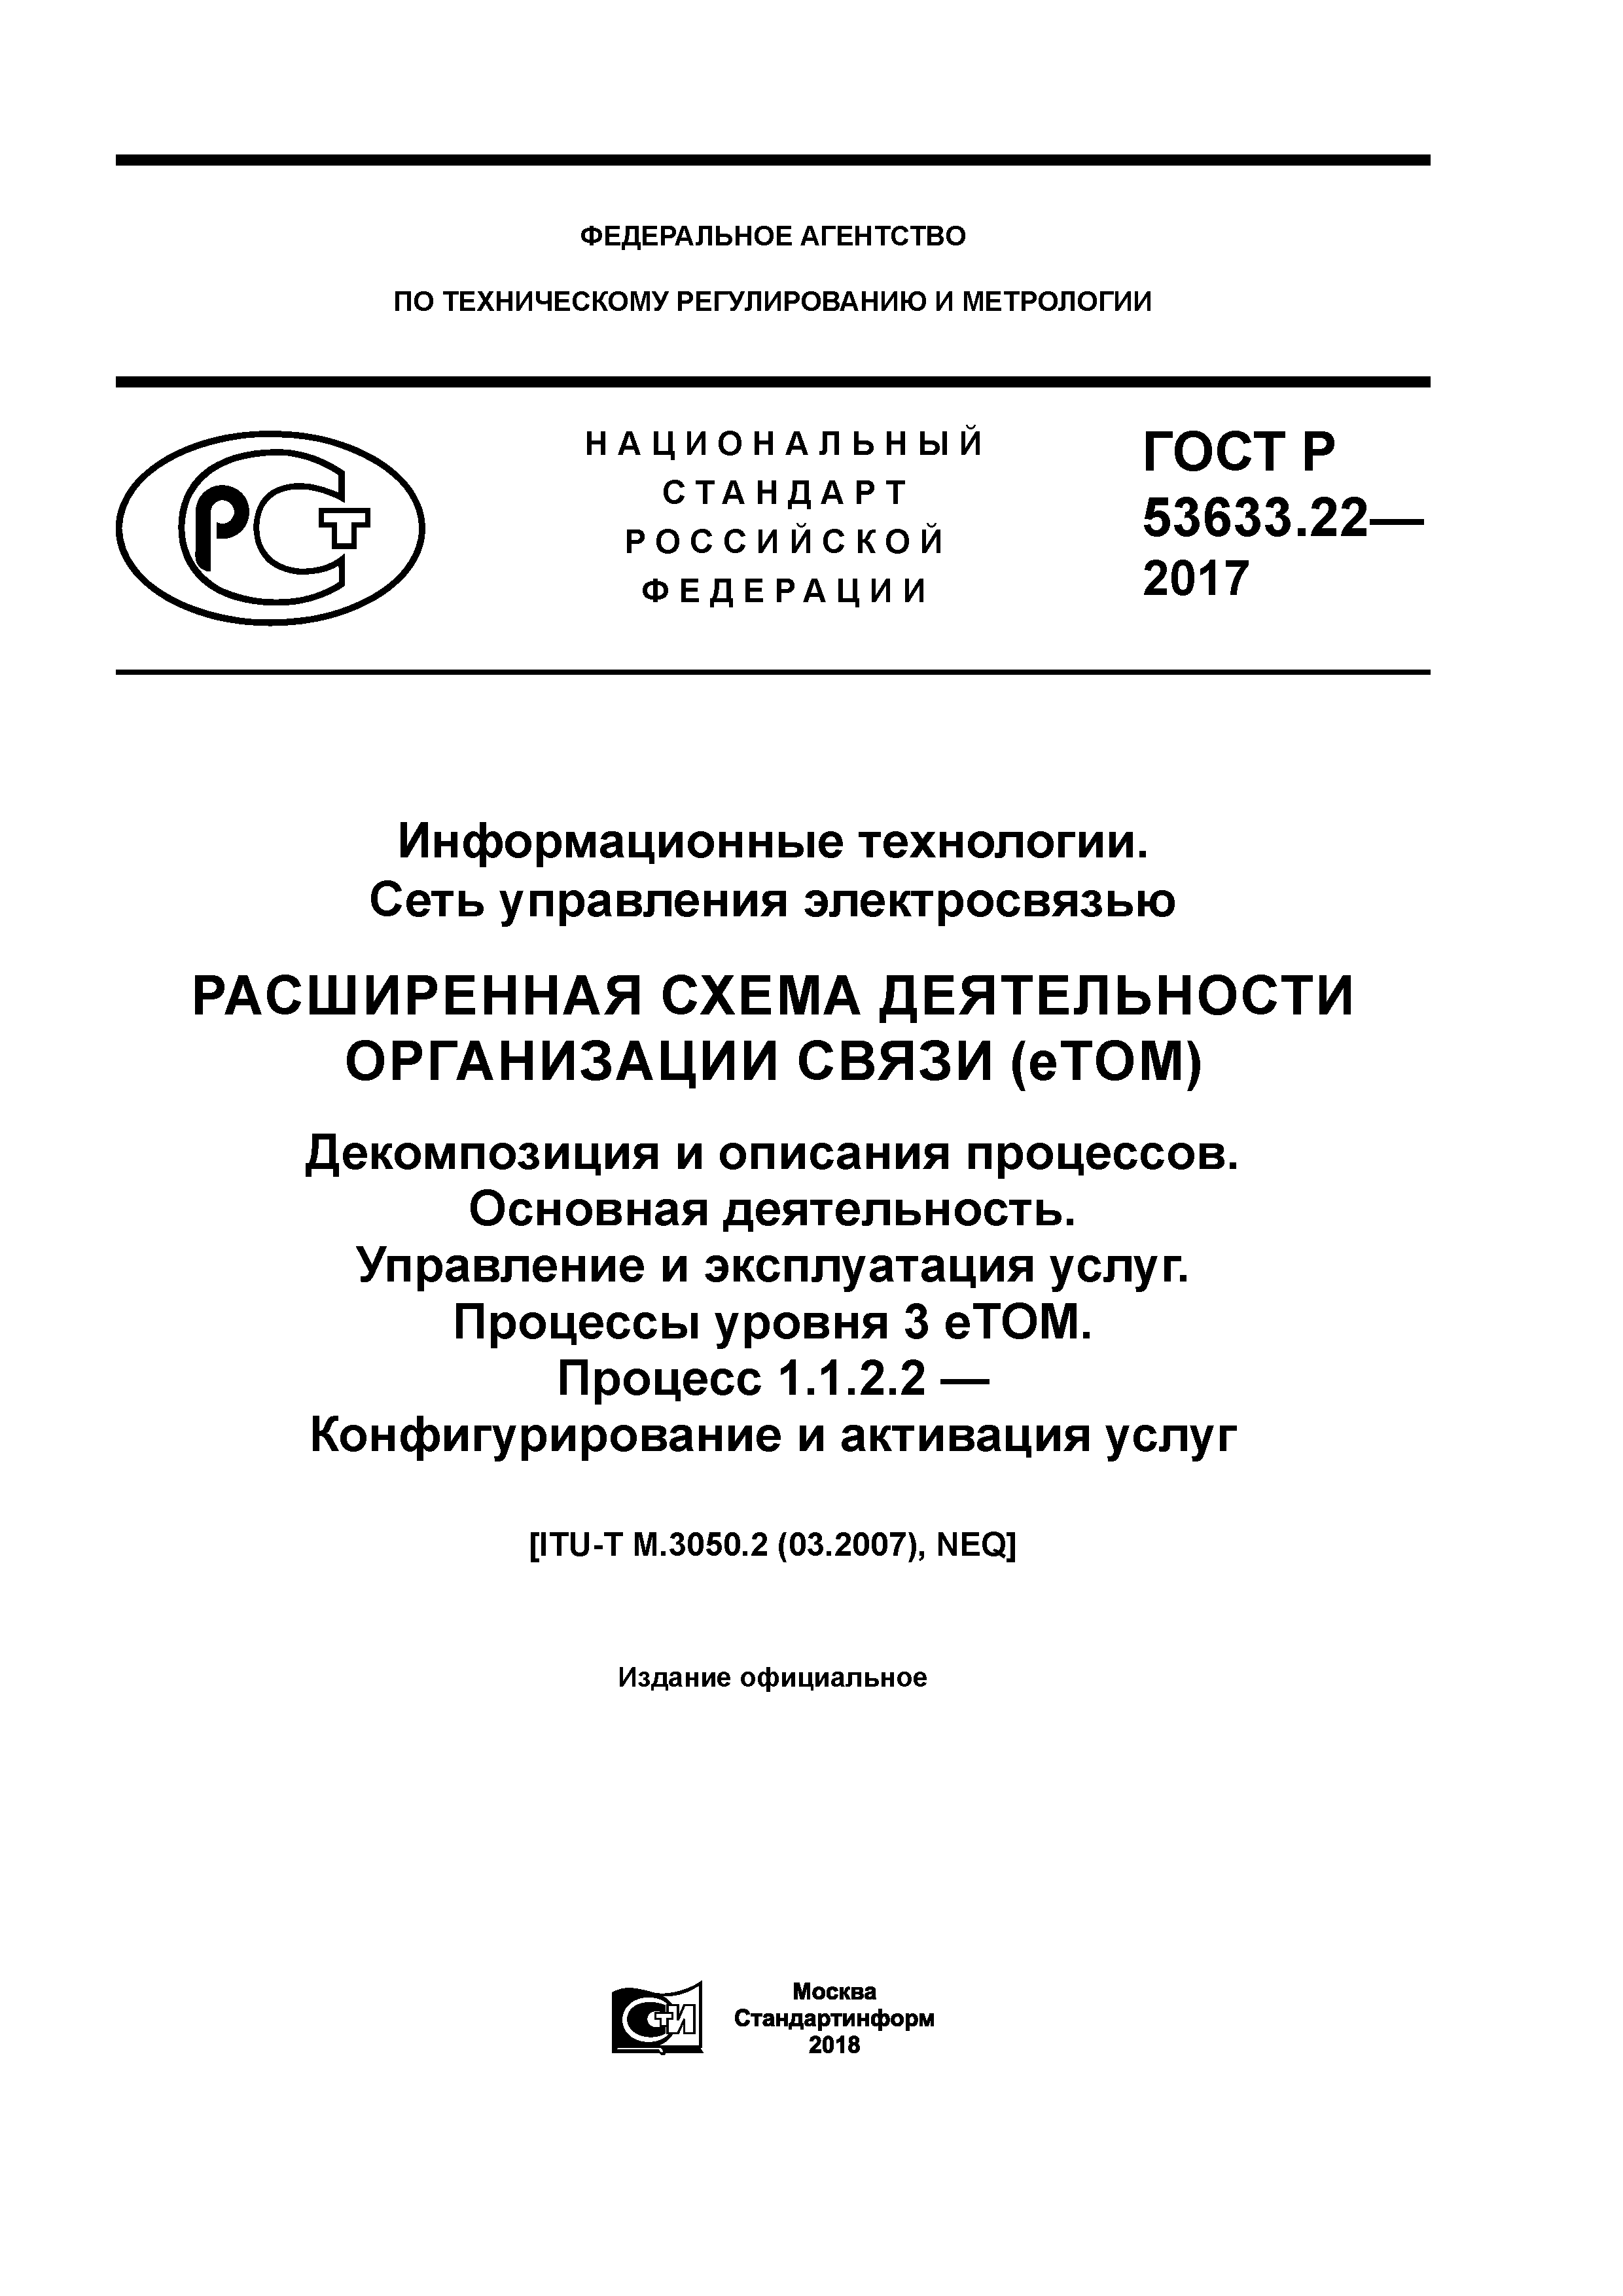 ГОСТ Р 53633.22-2017